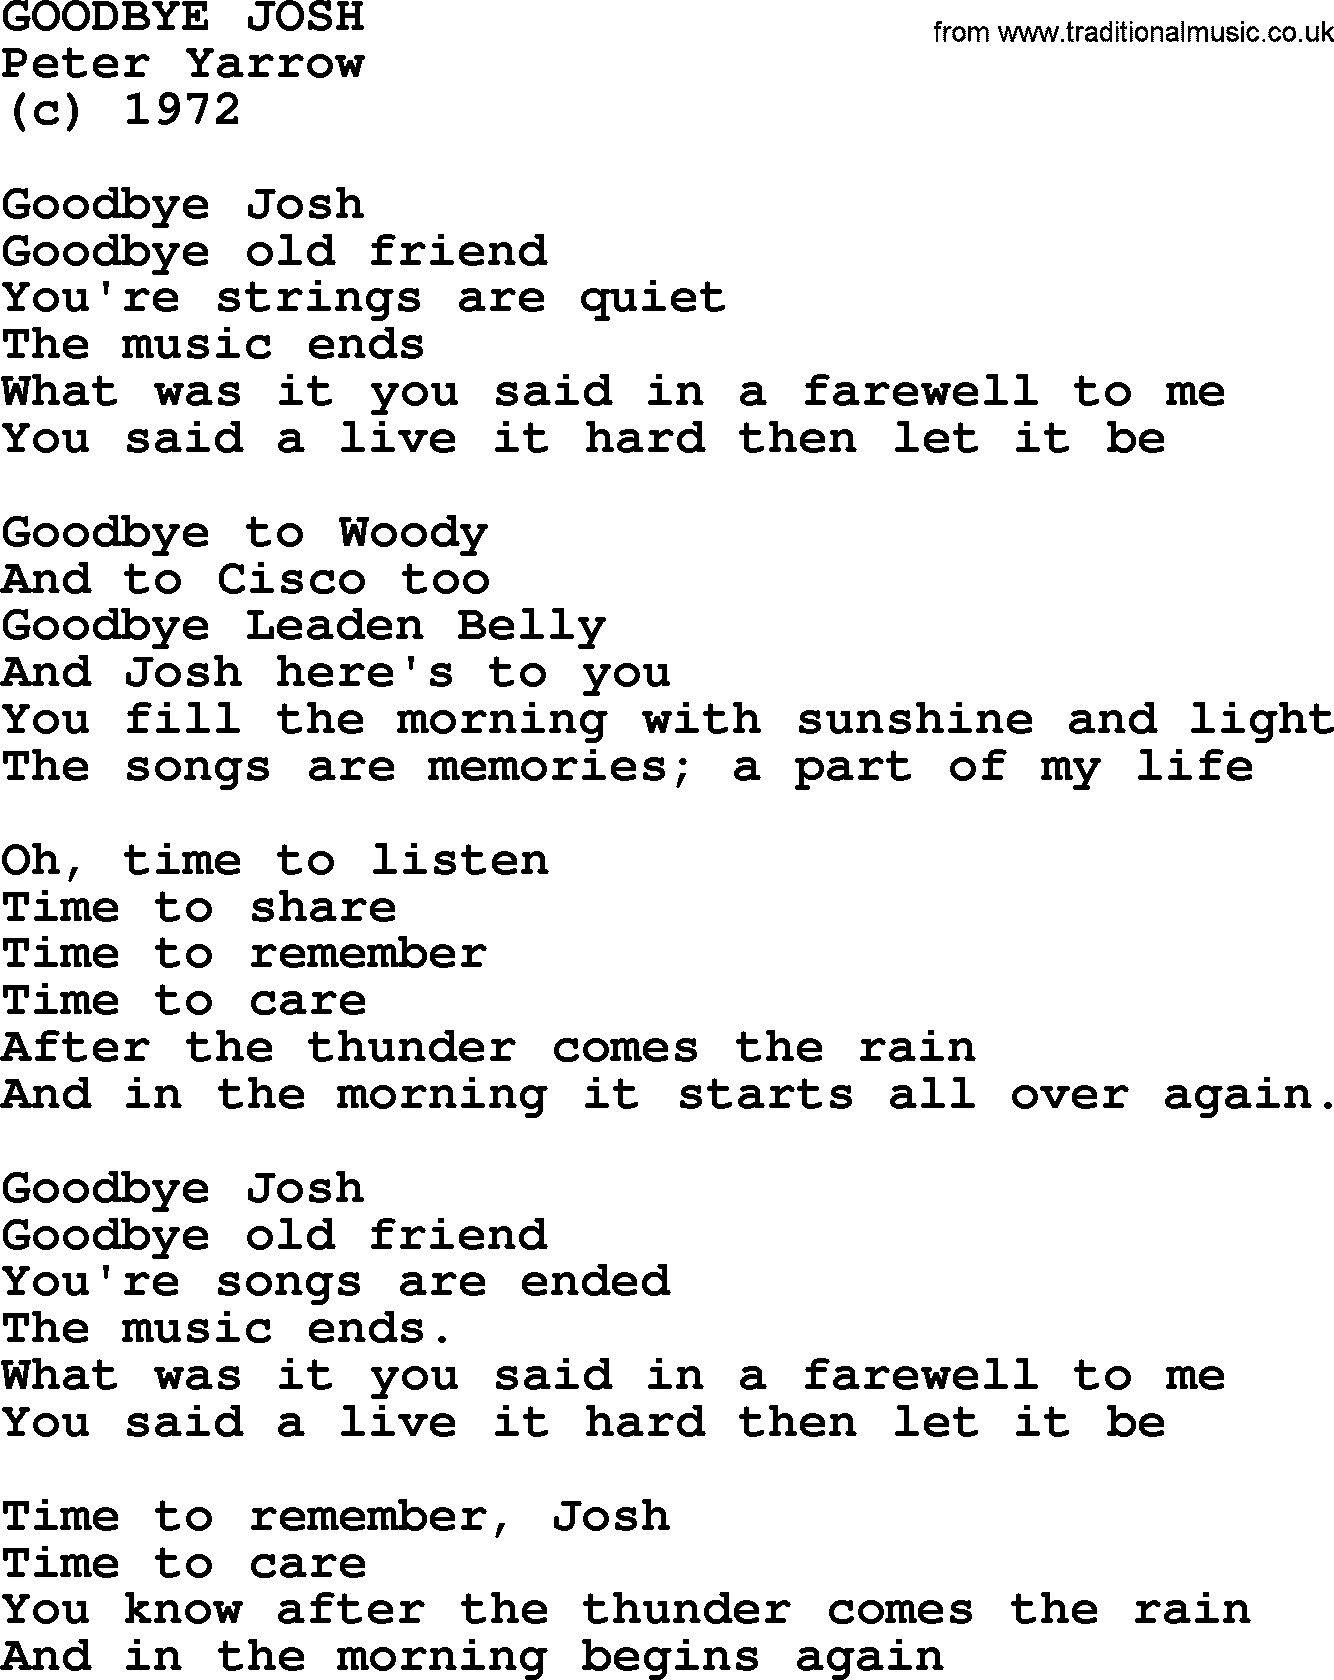 Peter, Paul and Mary song Goodbye Josh lyrics